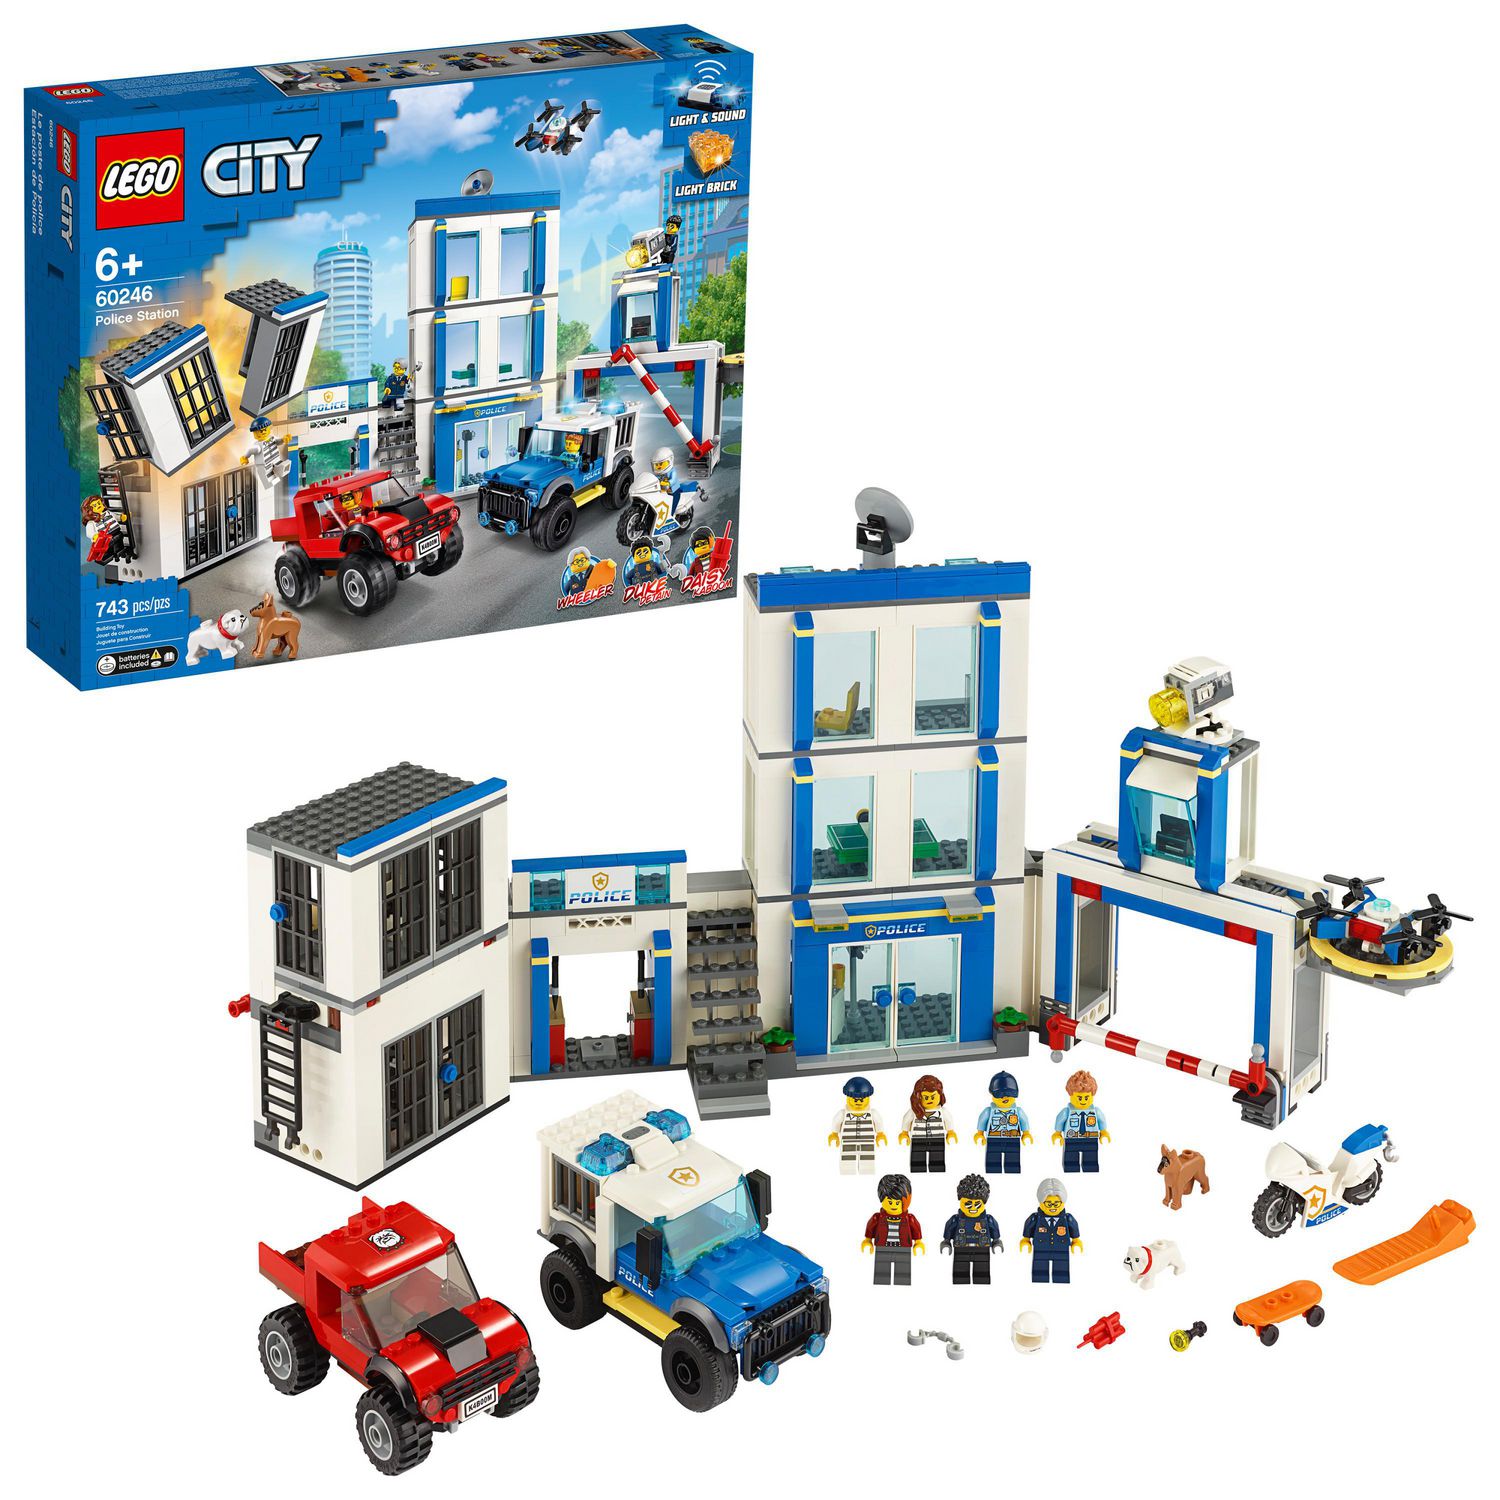 LEGO City Police Station 60246 Toy 